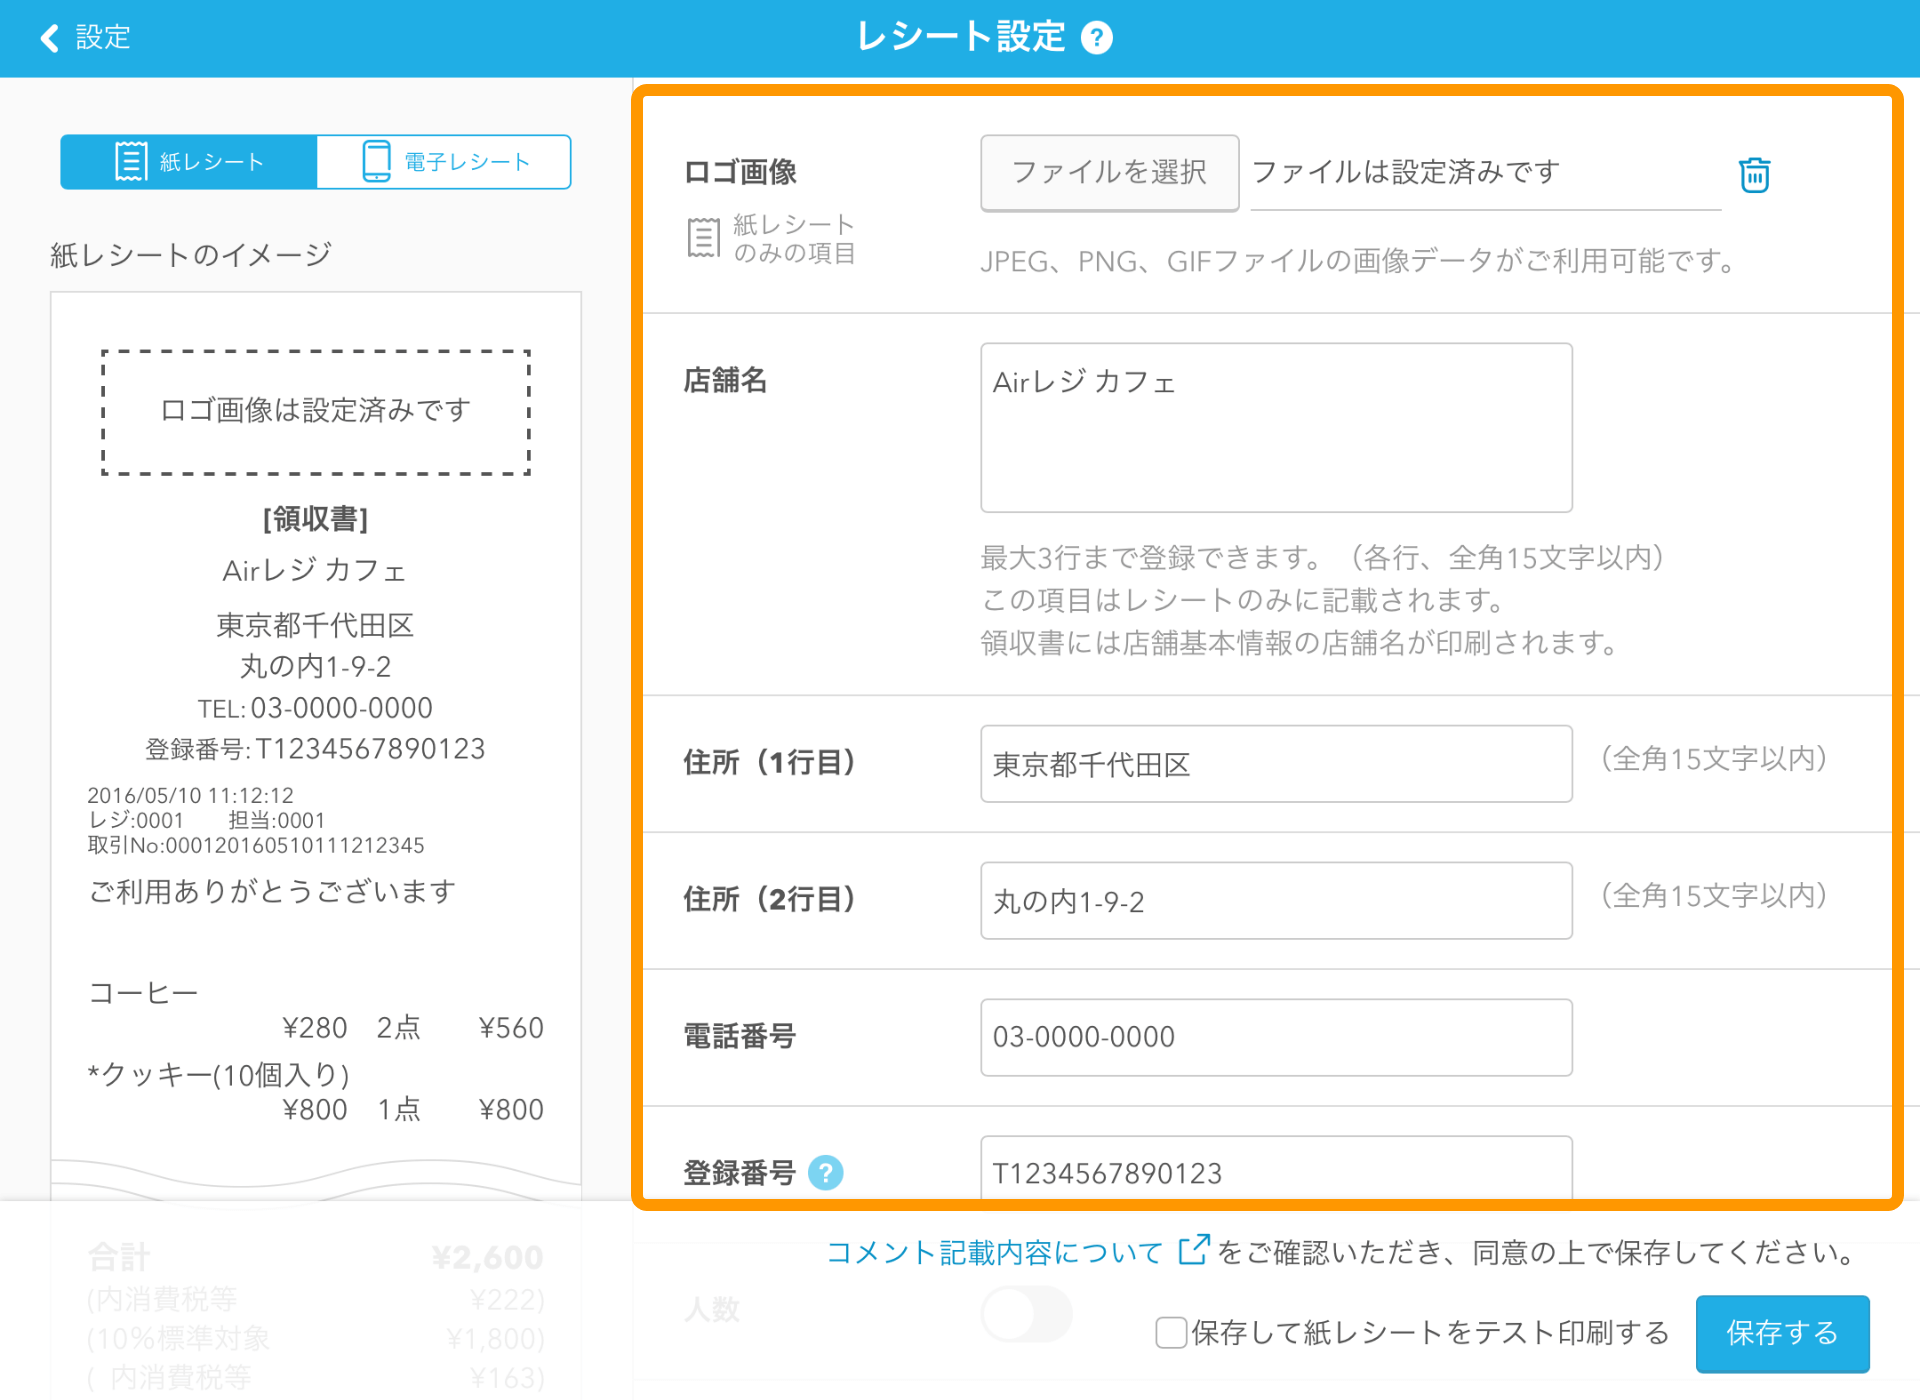 02 Airレジ レシート設定画面